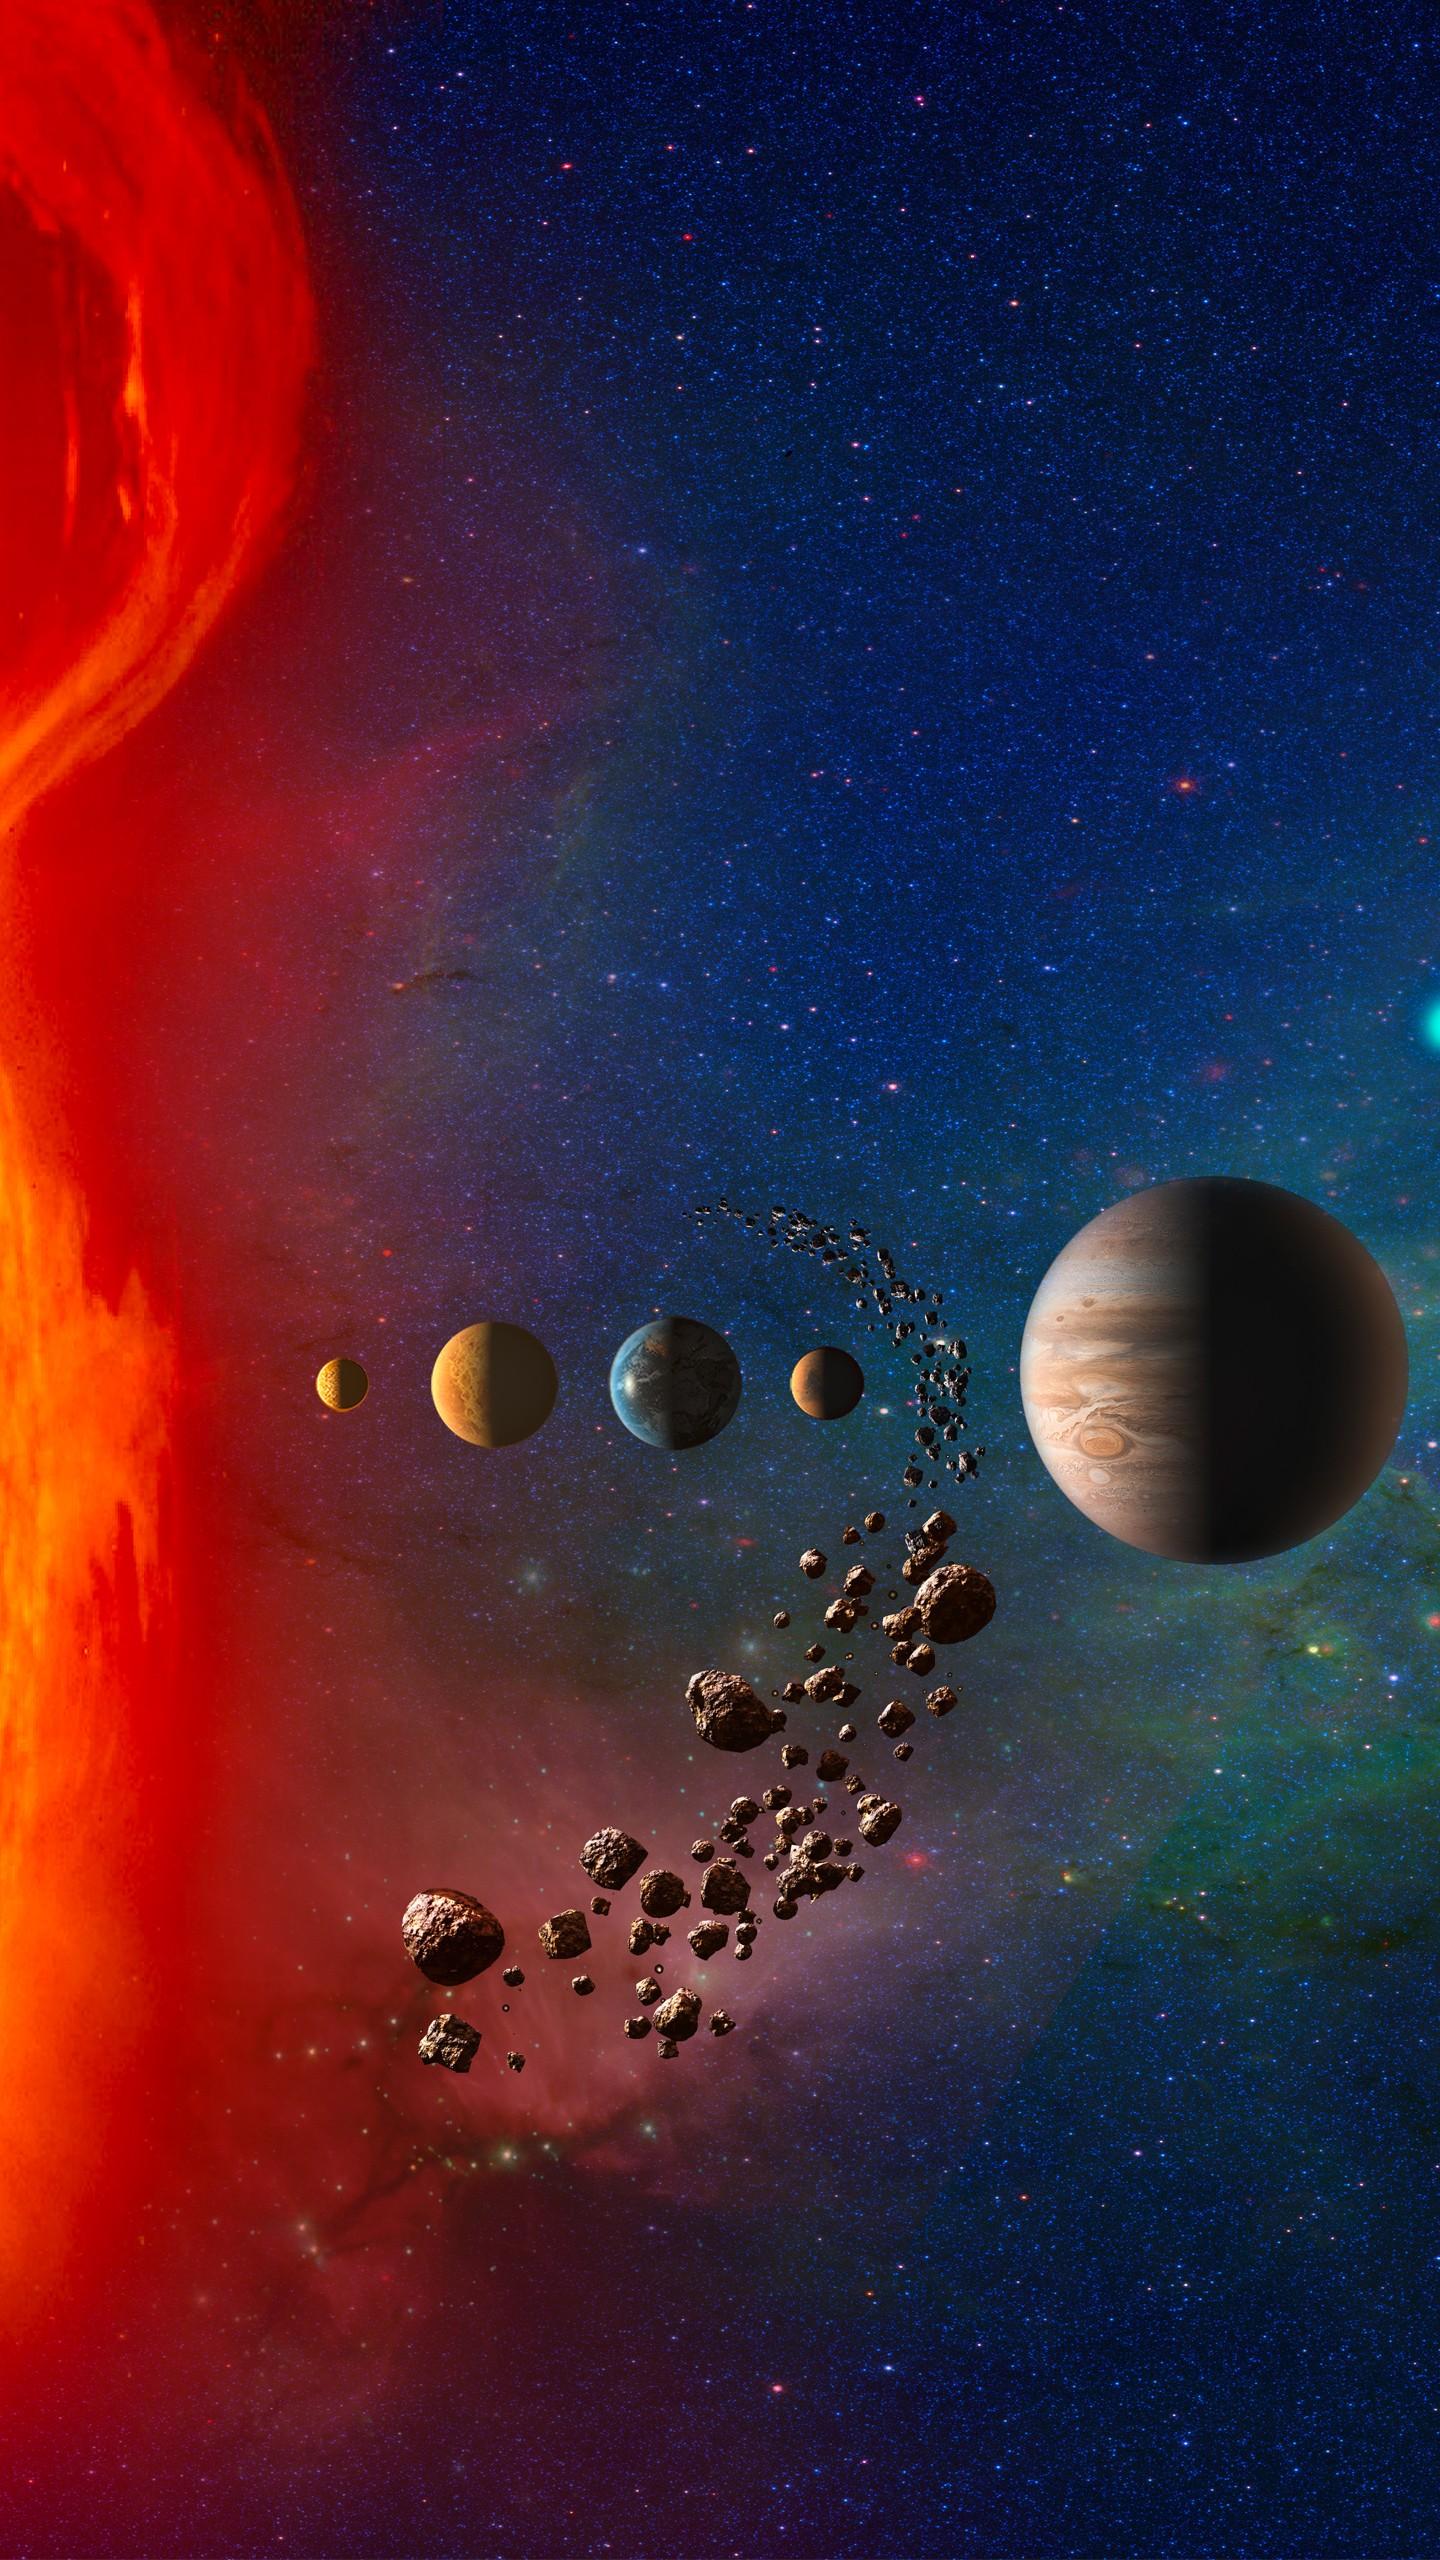 Planets in Solar System 4K Wallpaper